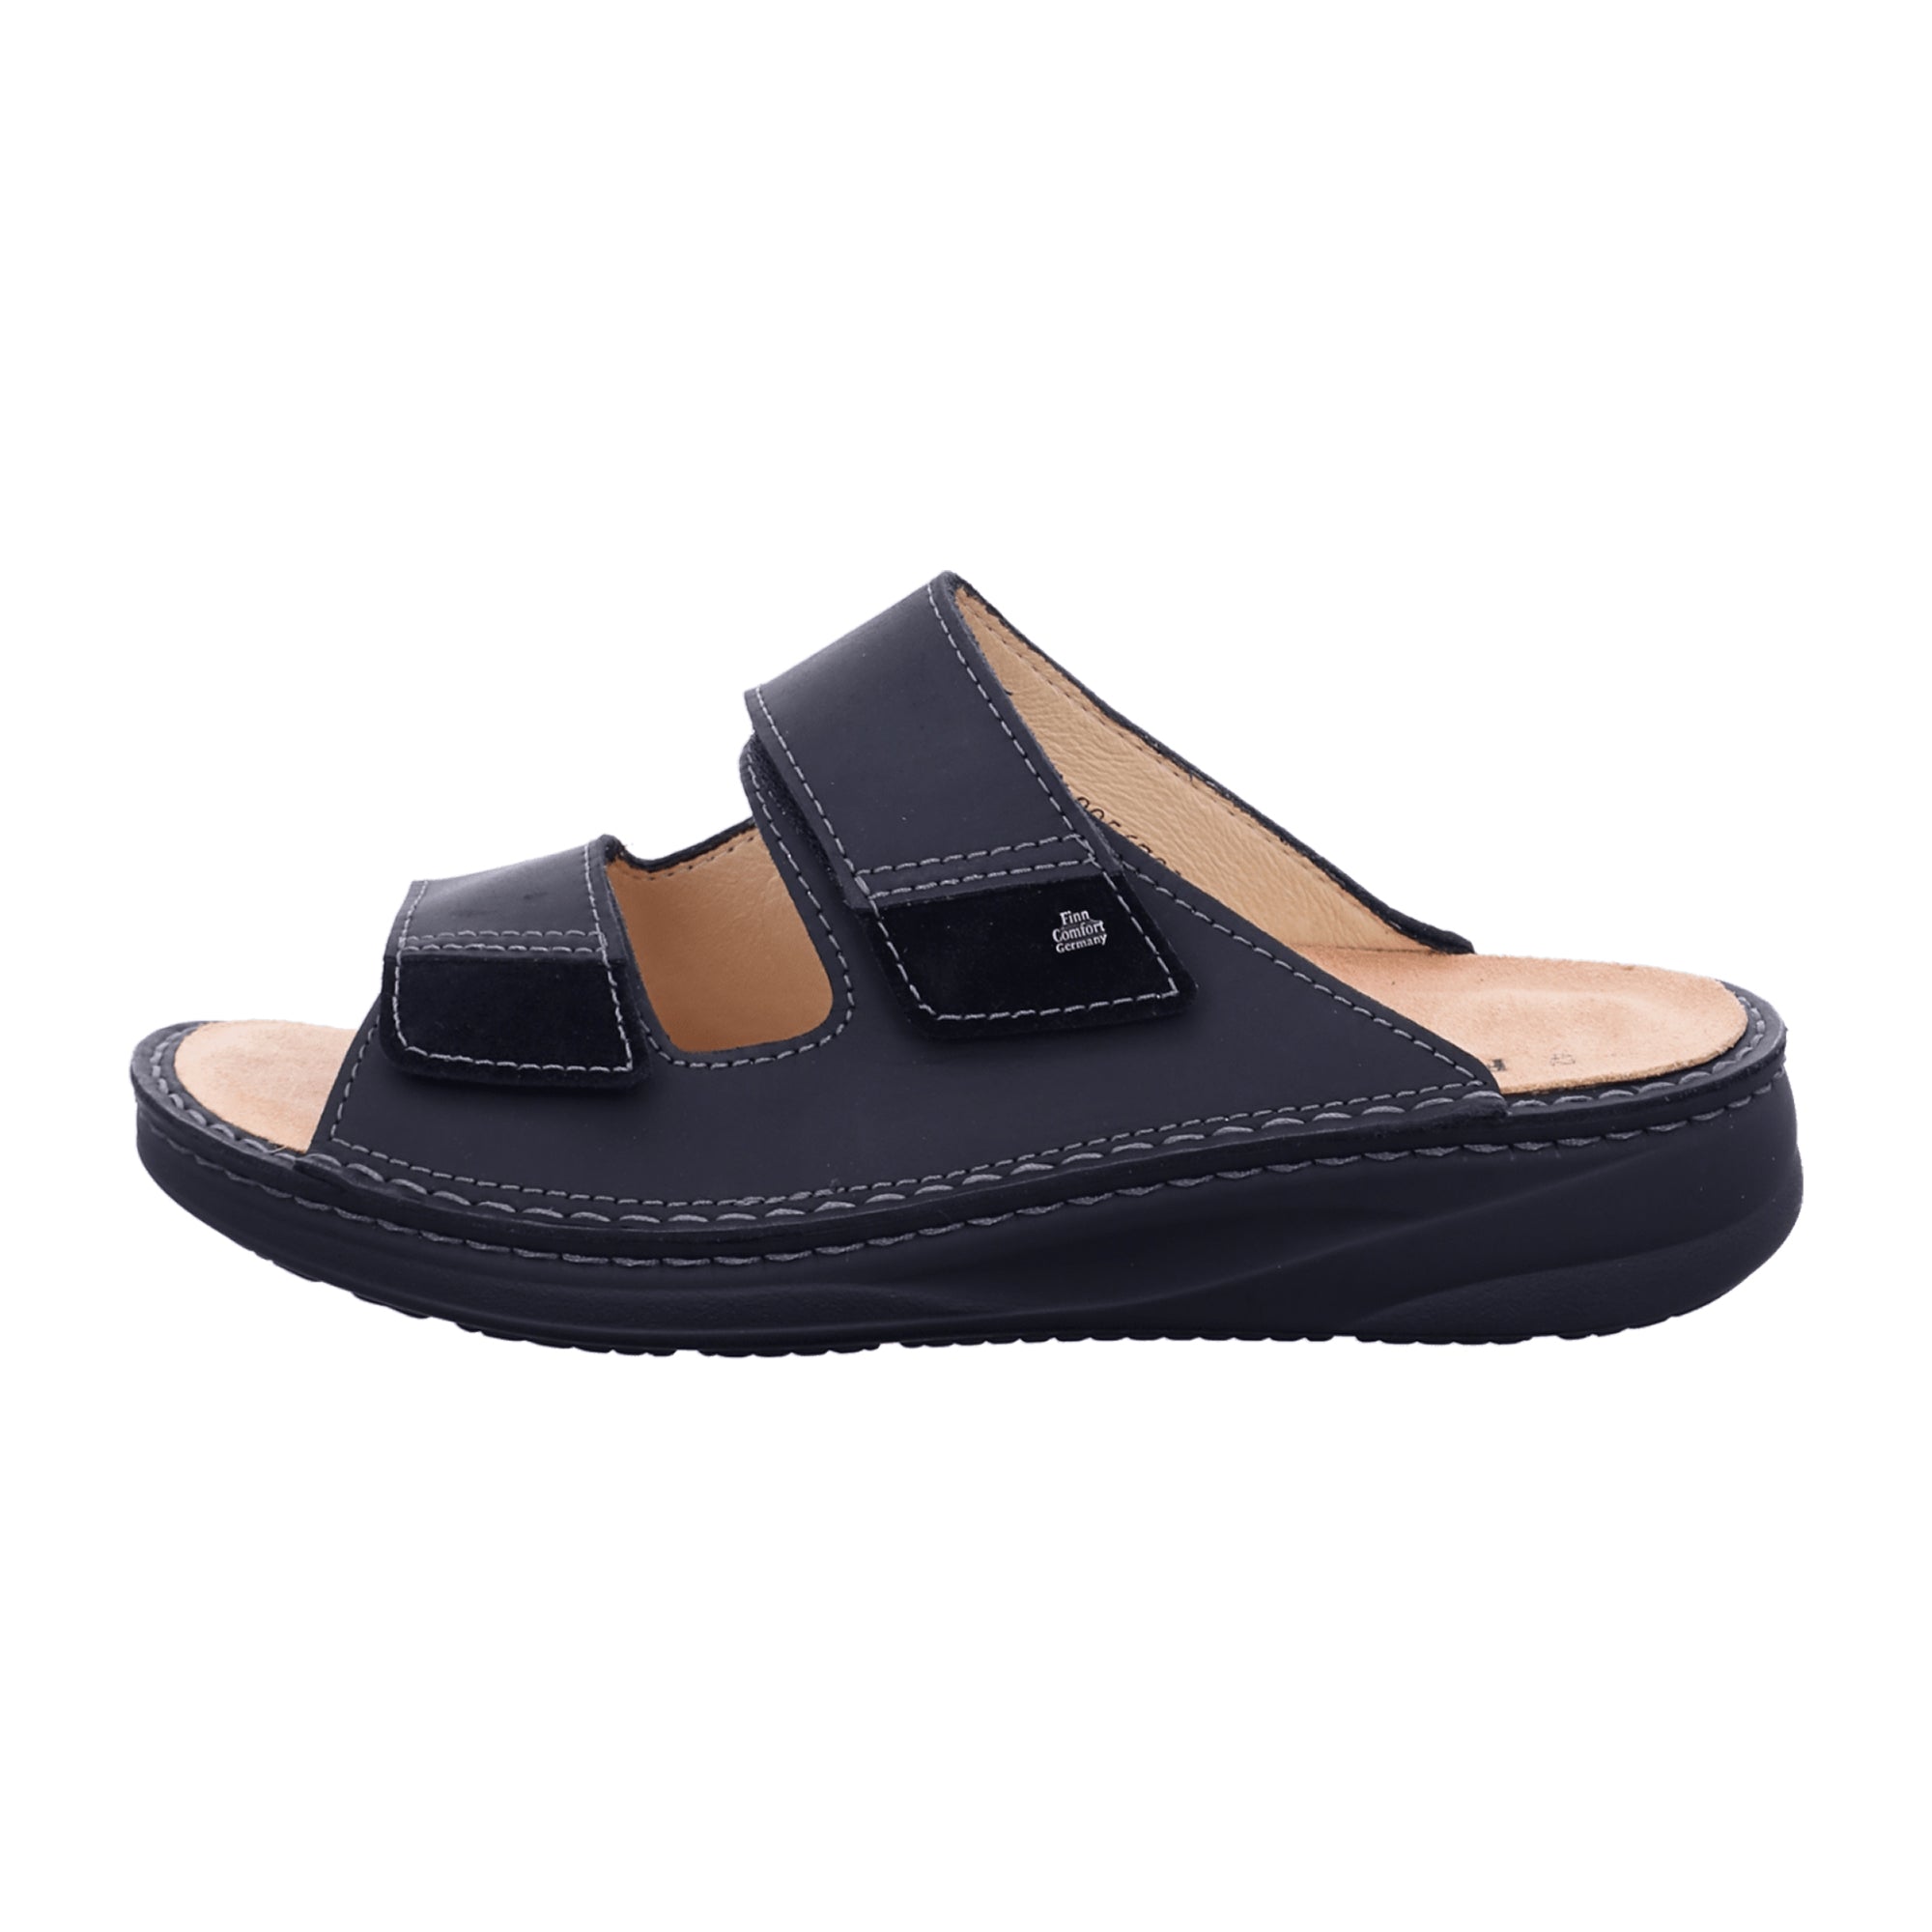 Finn Comfort Psara Men's Slides - Comfortable Black Leather Sandals with Soft Footbed